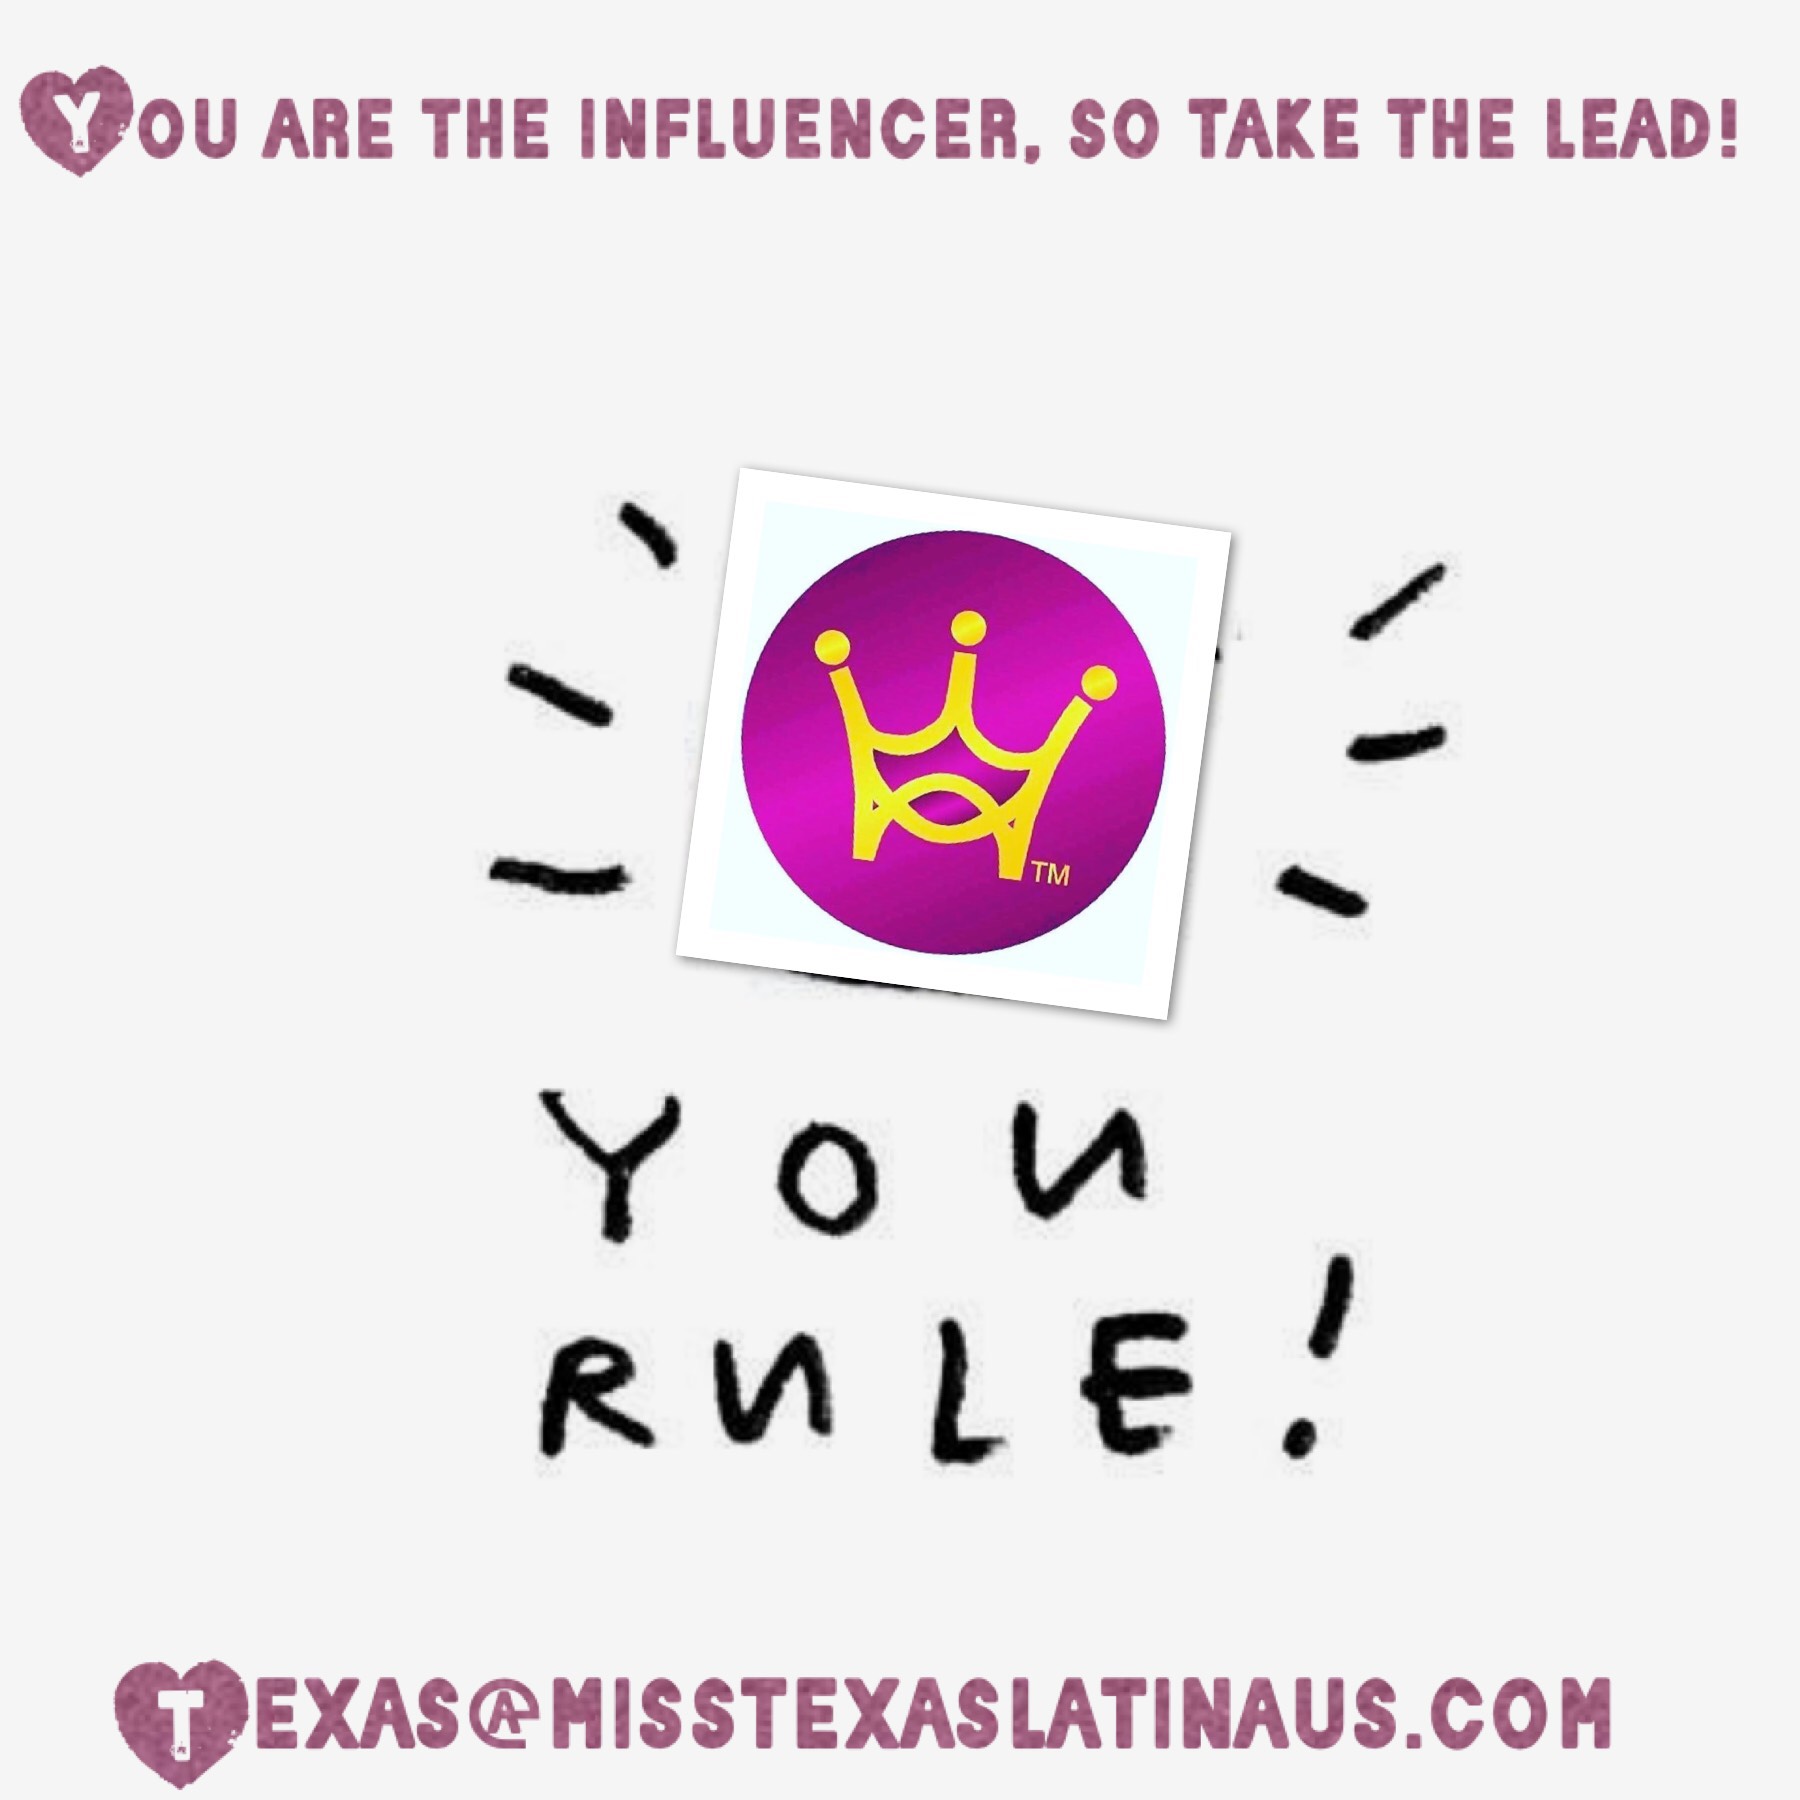 You Rule! Instagram : misstexaslatina 
Follow us!